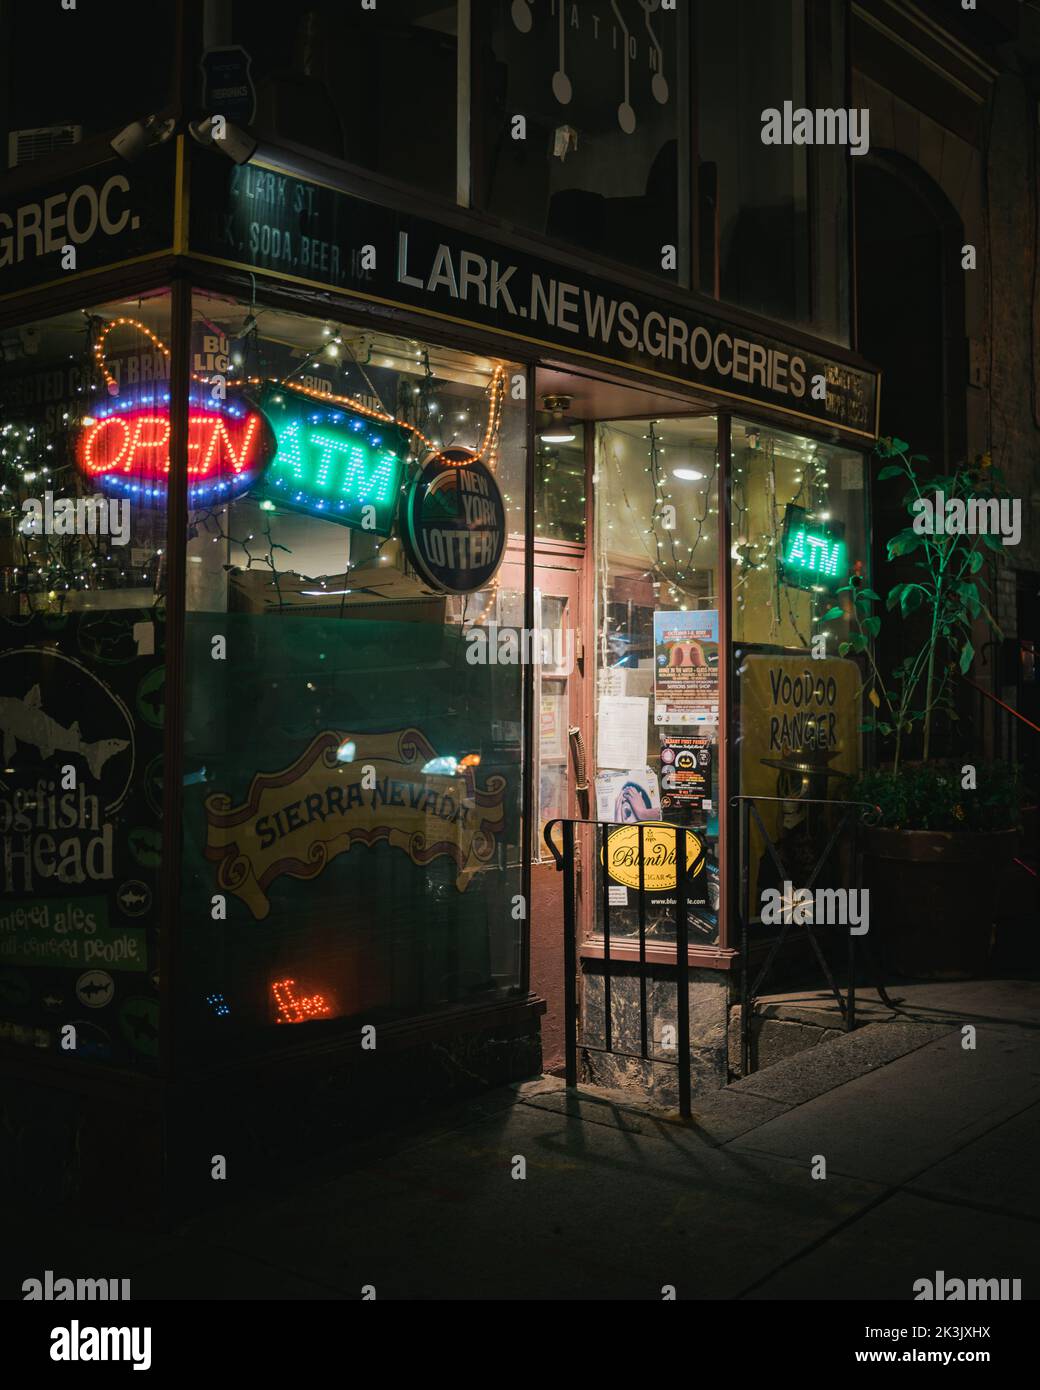 Lark News & Grocery segno di notte, Albany, New York Foto Stock